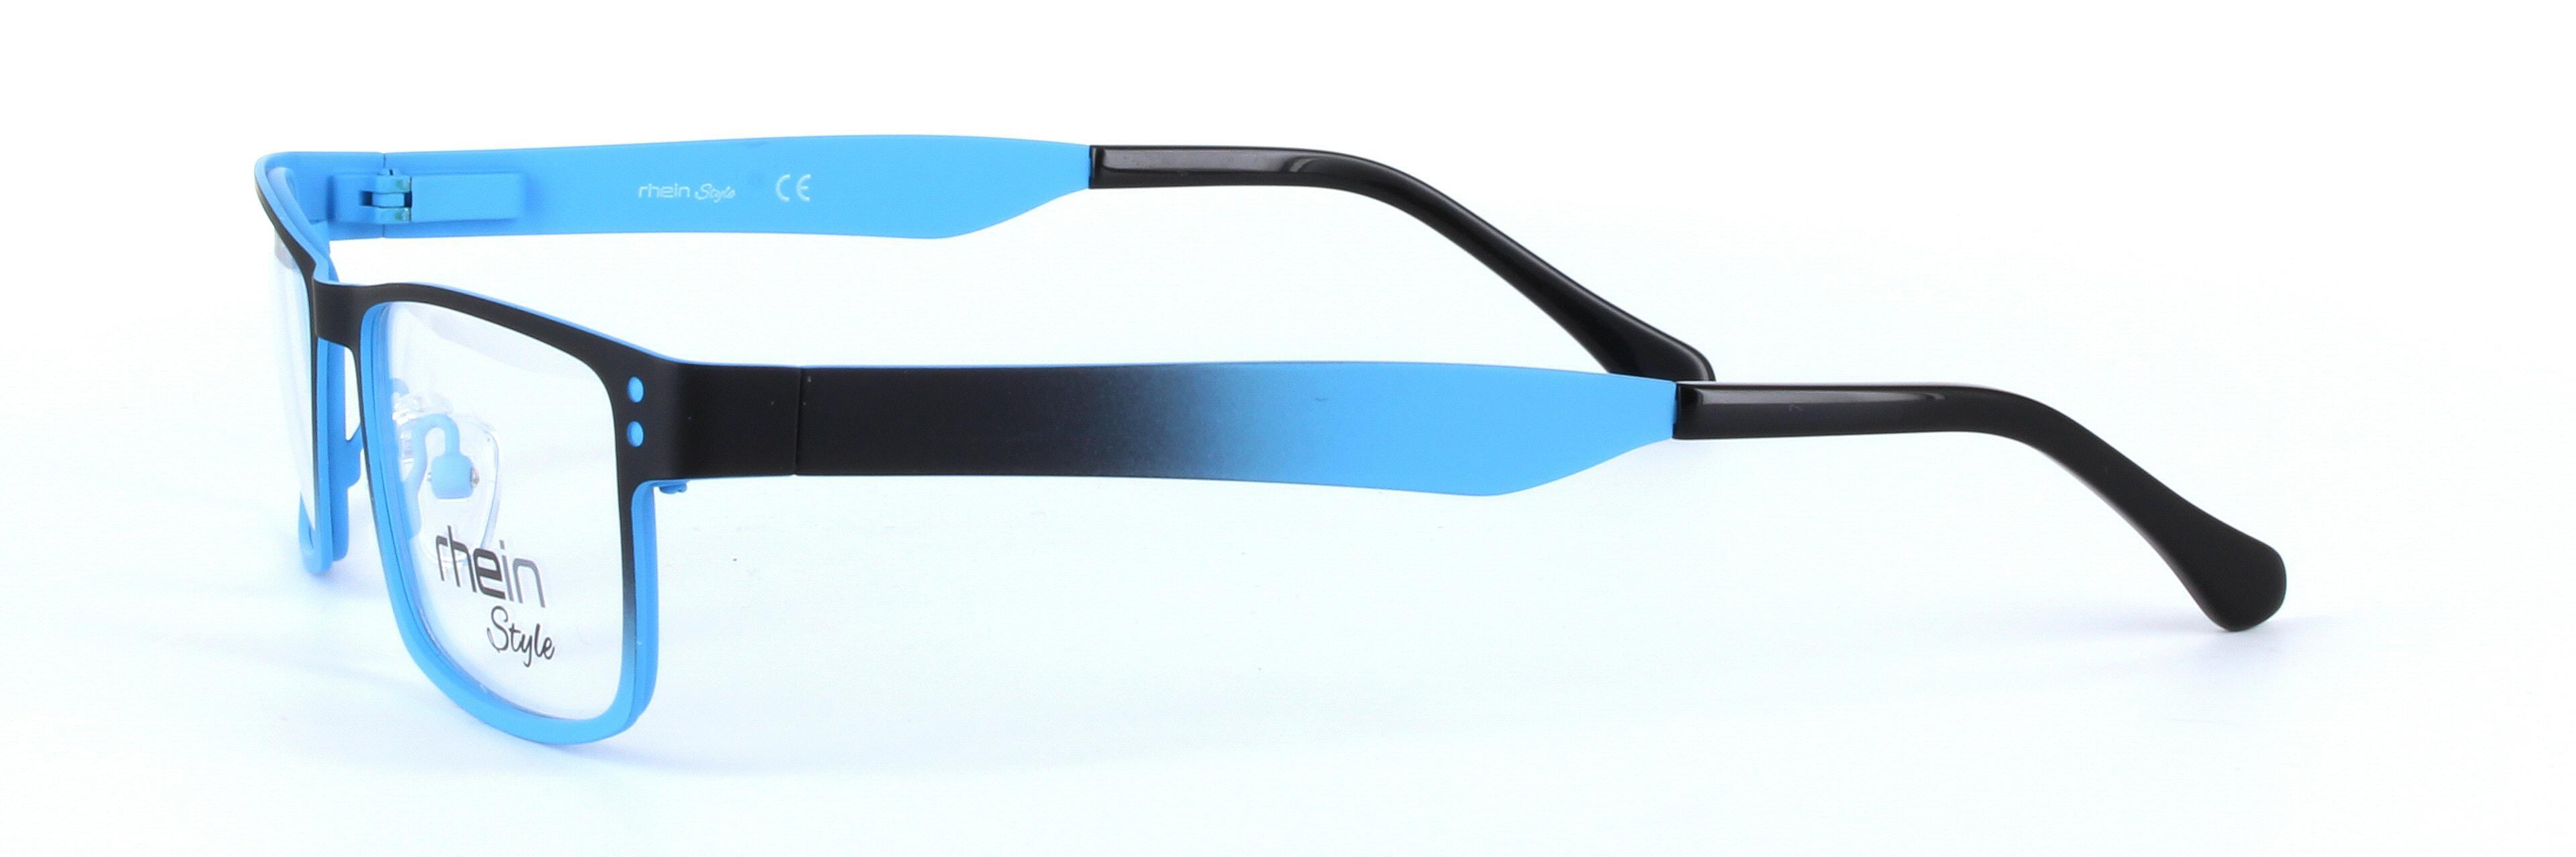 Ambleside Black and Blue Full Rim Rectangular Metal Glasses - Image View 2